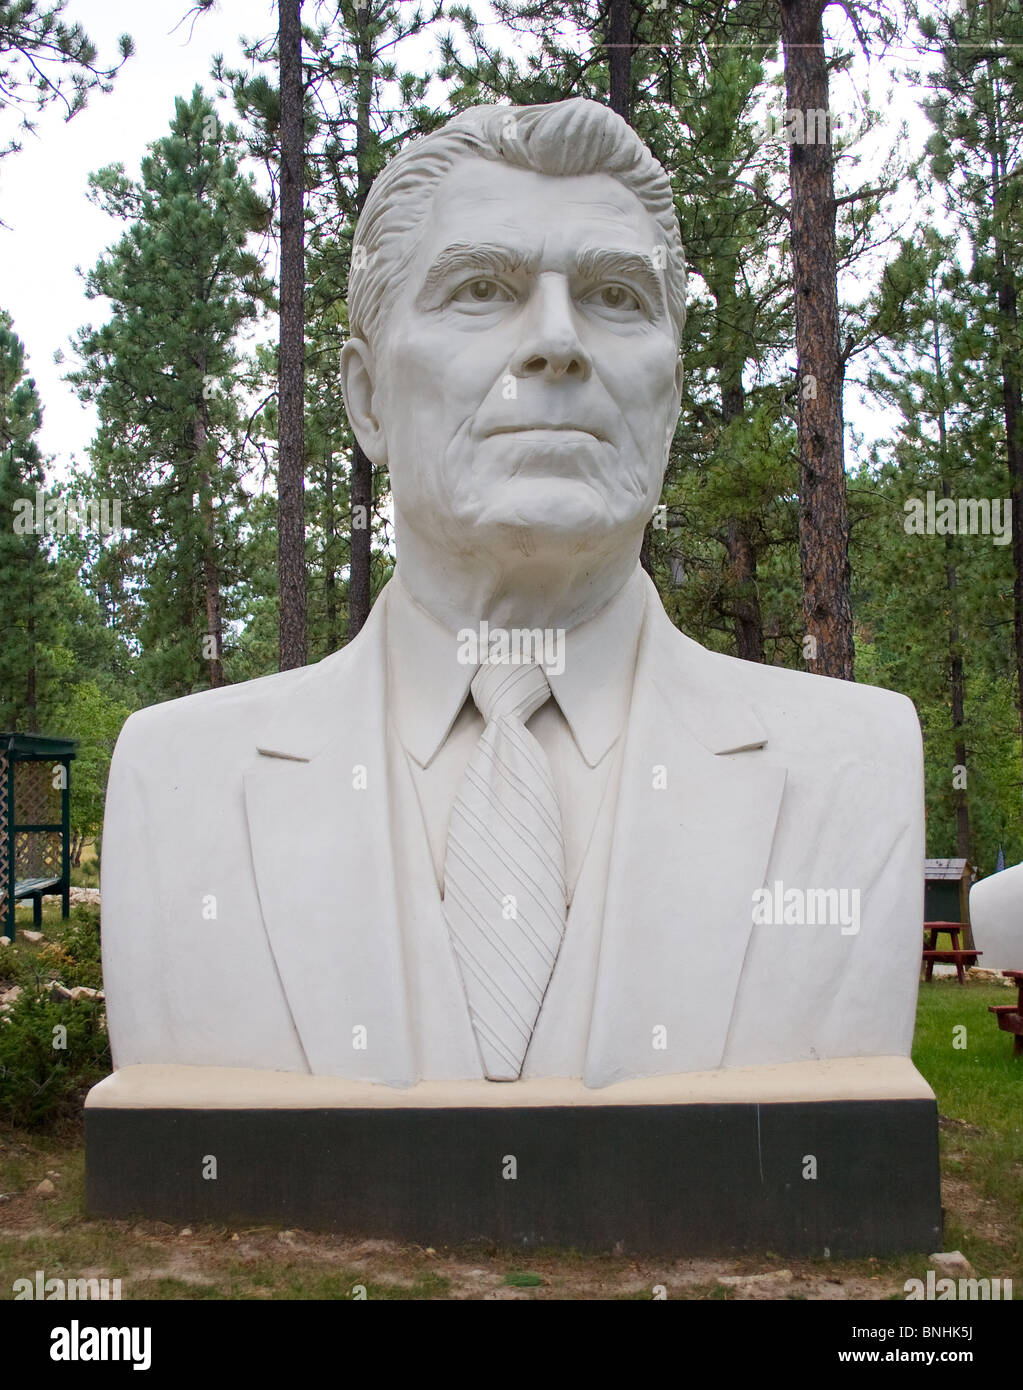 Ronald Reagan bust by sculptor David Adickes at Presidents Park in Lead South Dakota Stock Photo